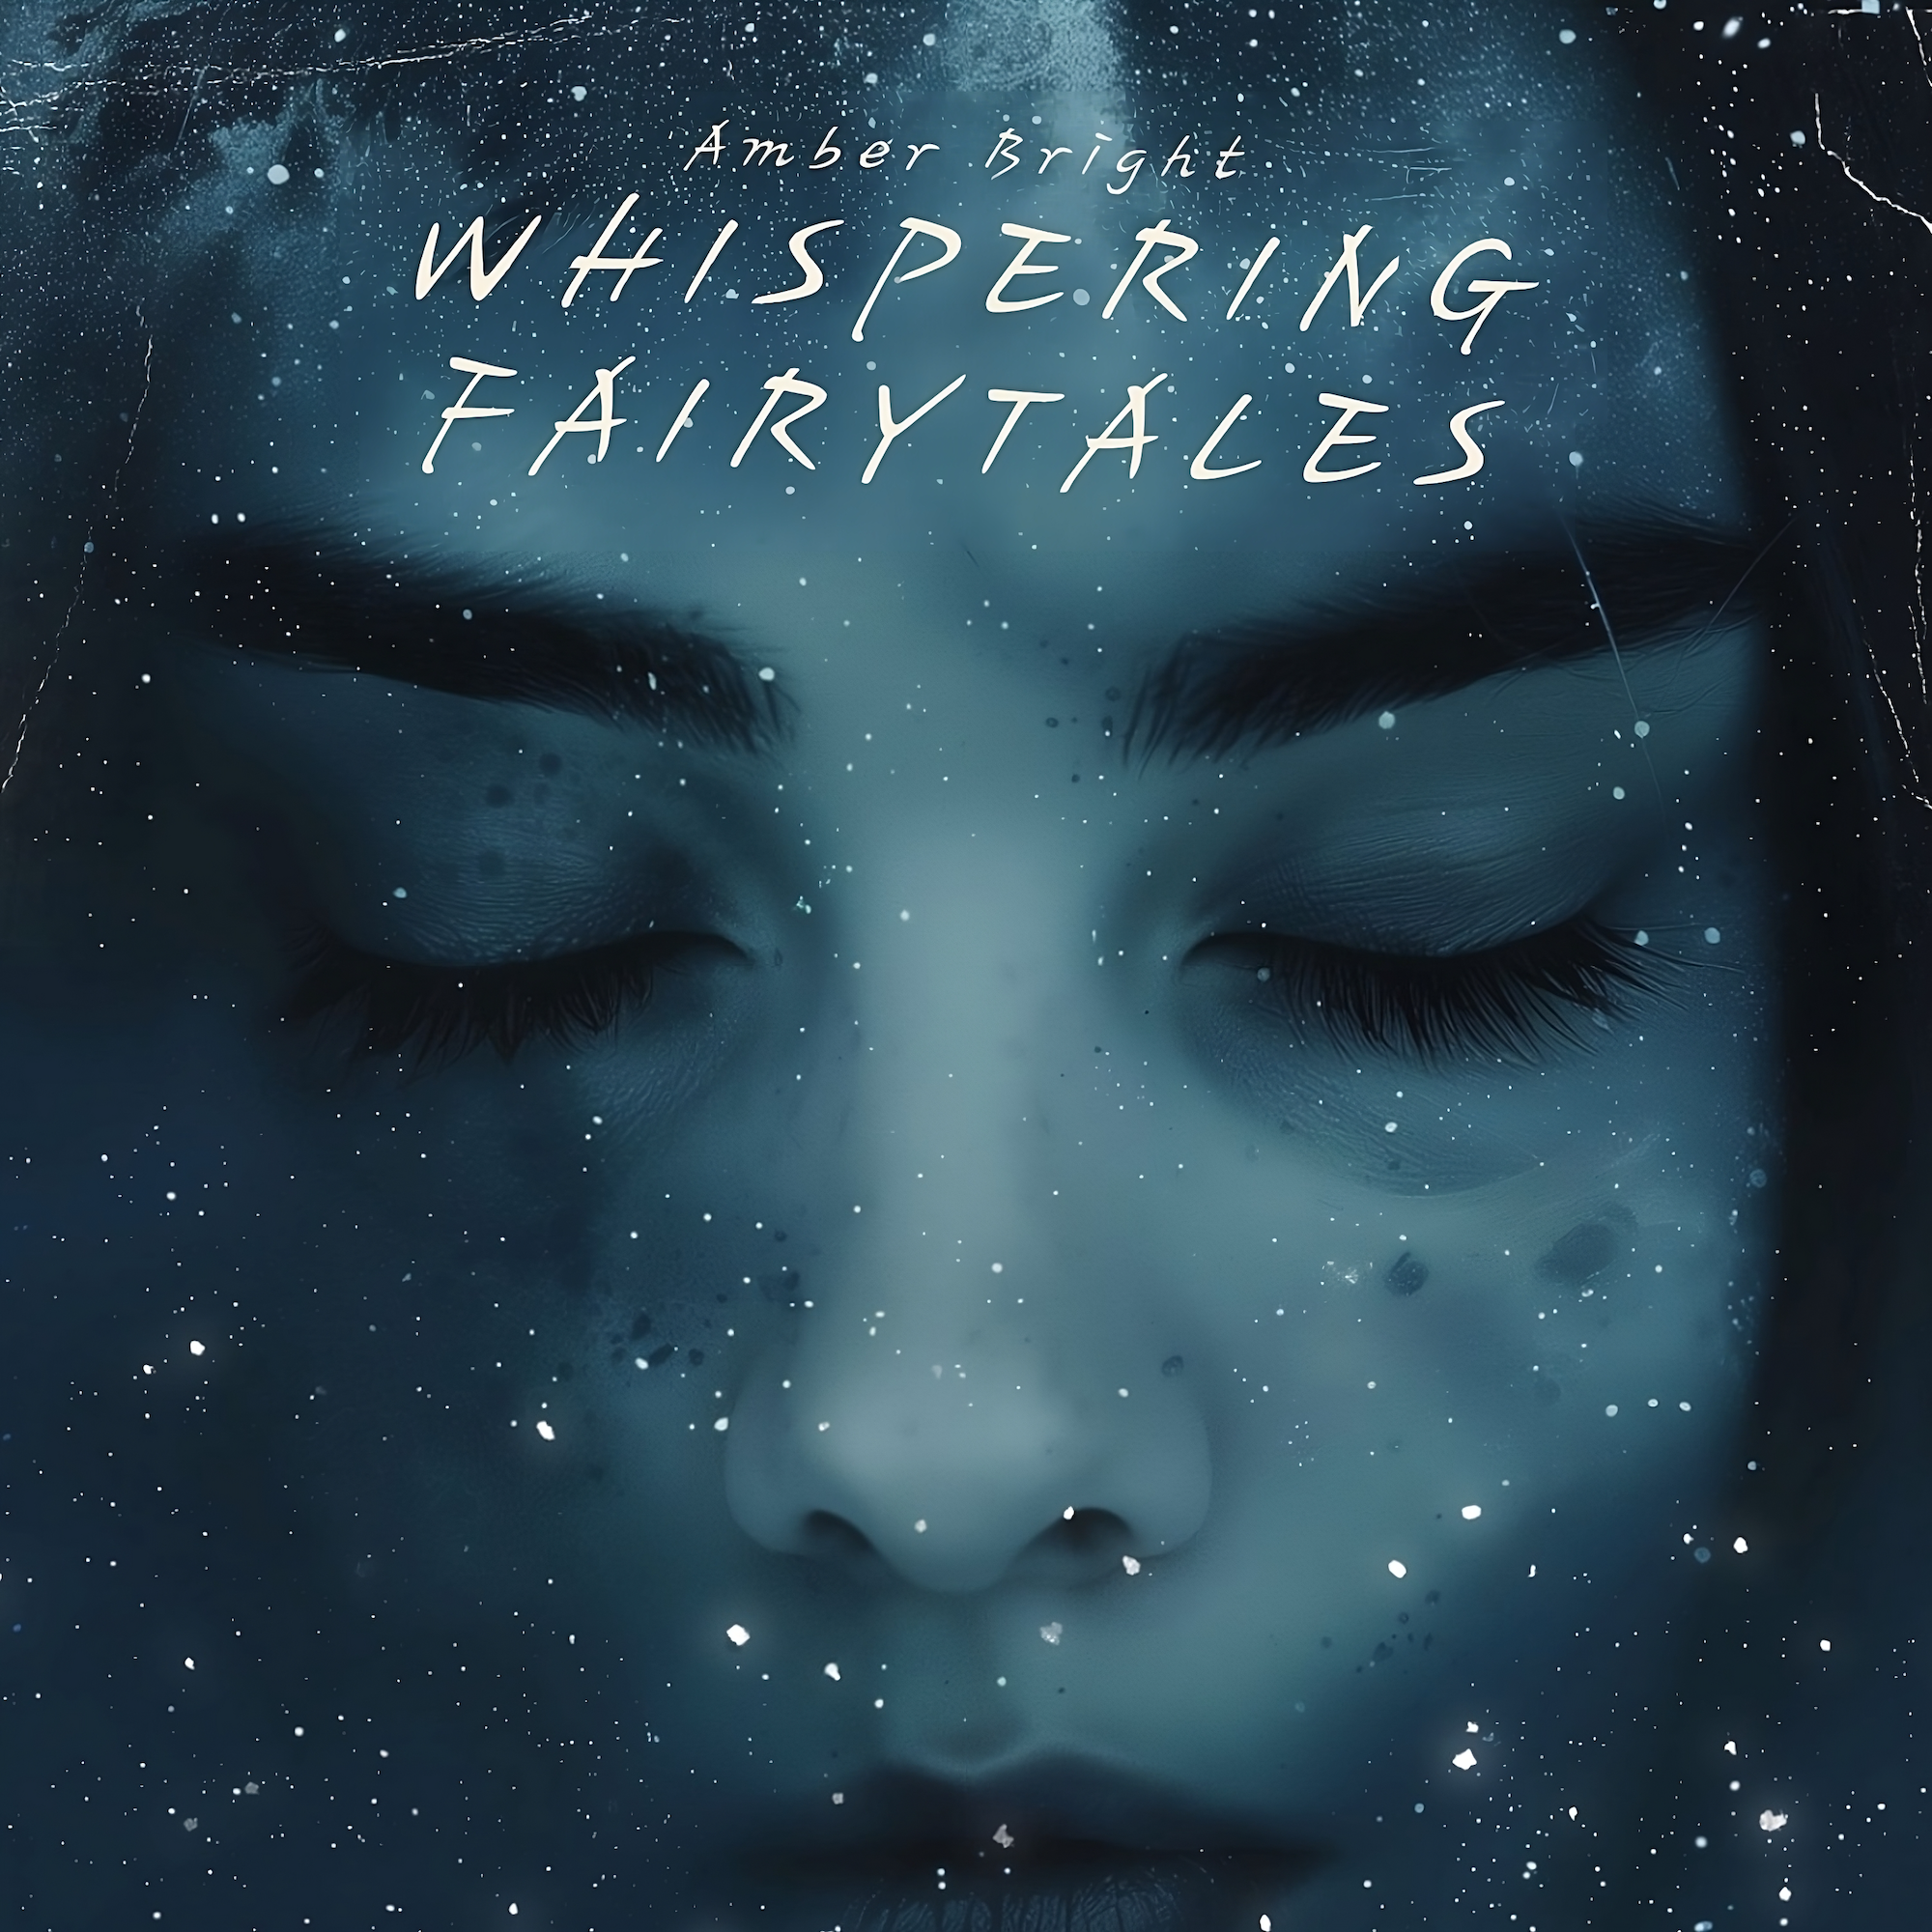 Whispering Fairytales